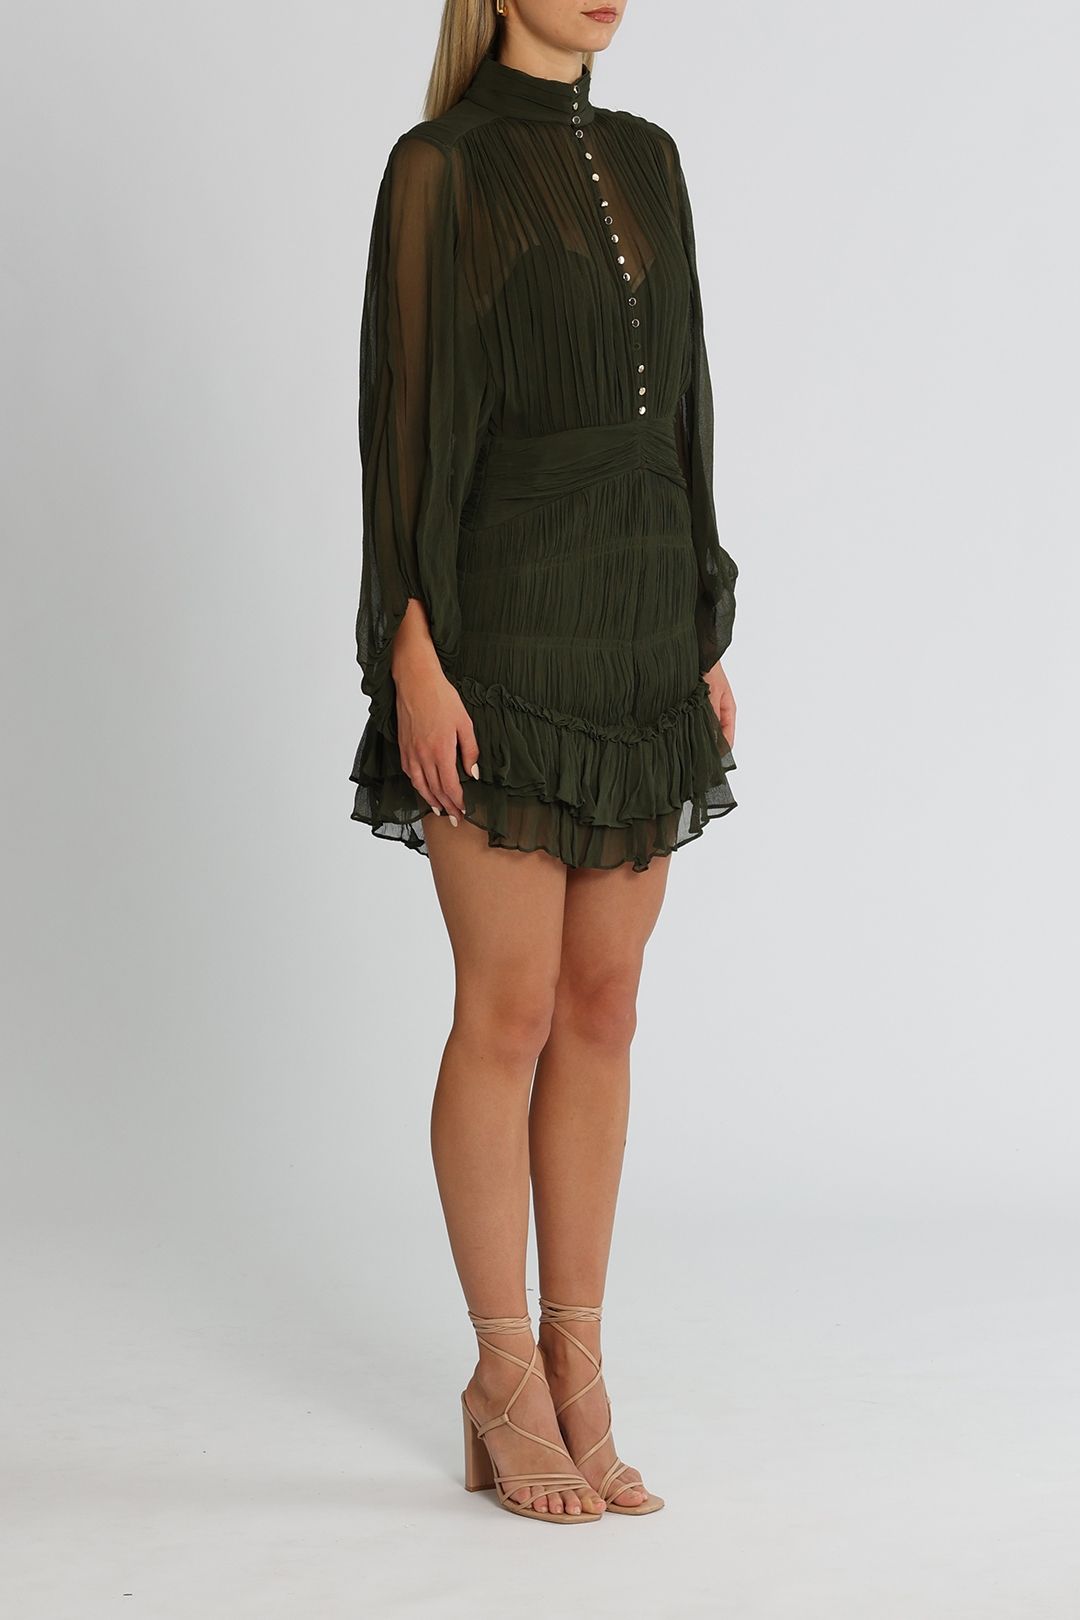 Shona Joy Safira Button Up Ruched Mini Dress Olive Long Sleeves